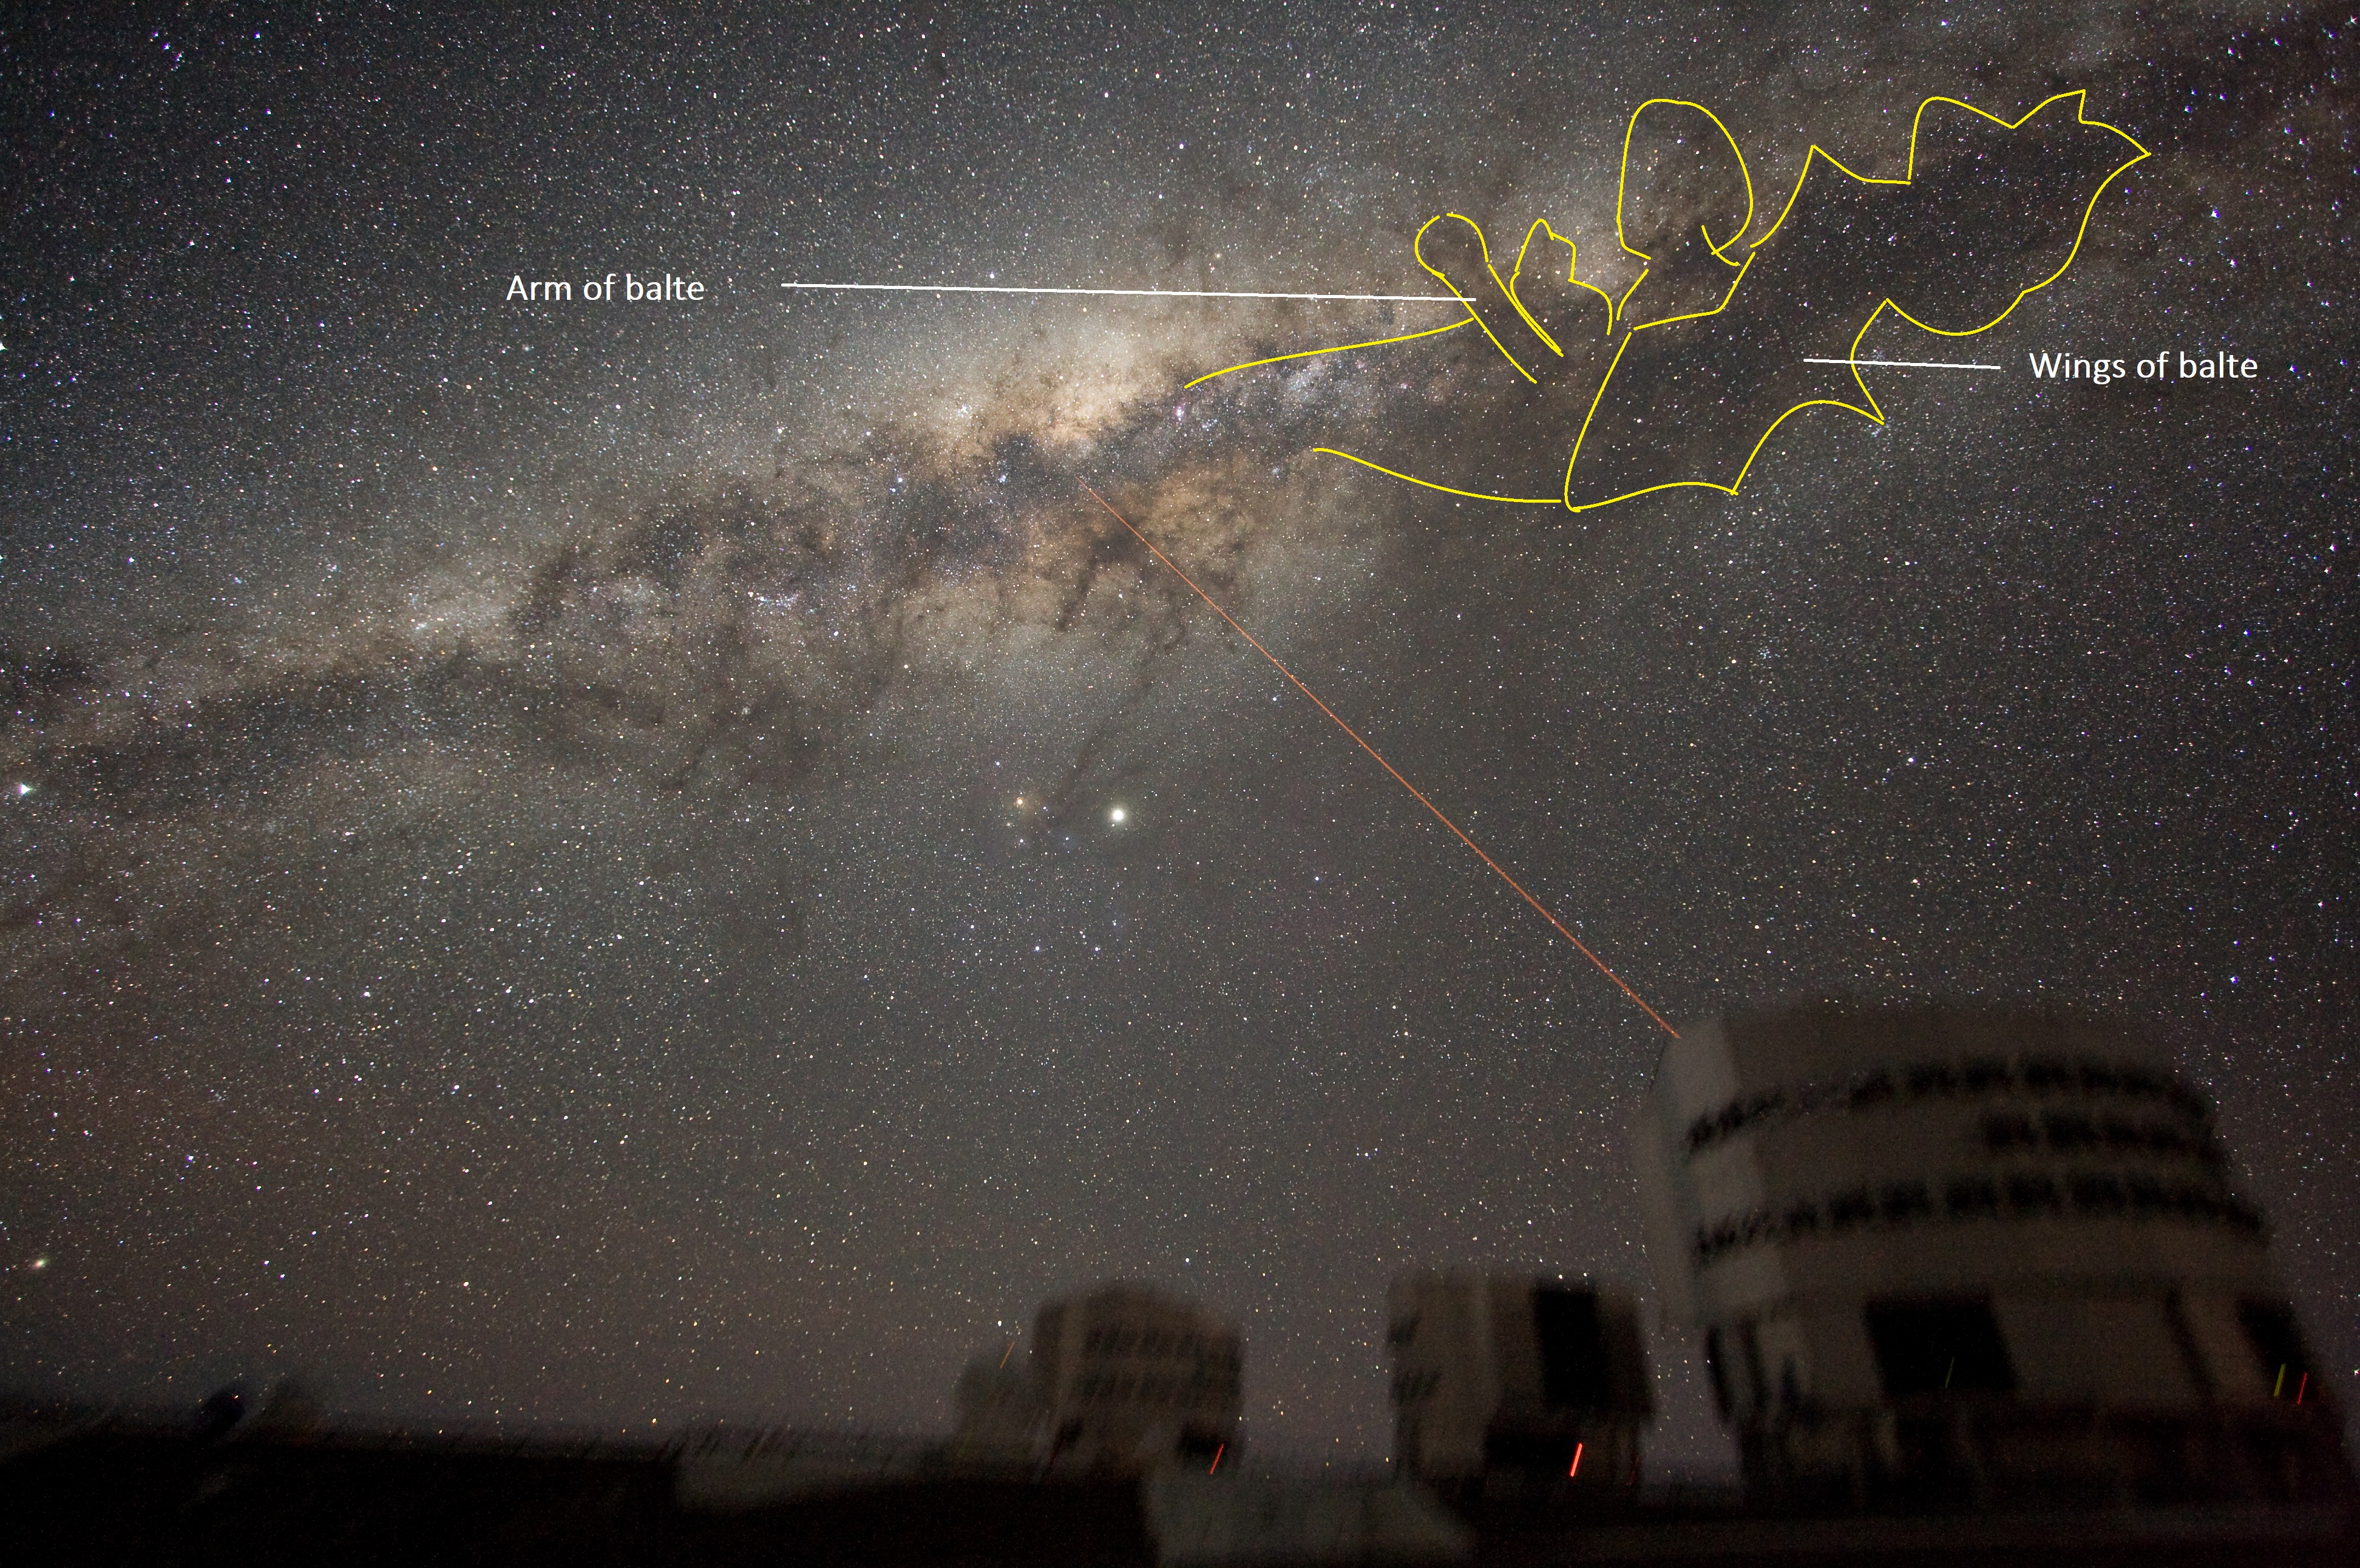 ESO-VLT-Laser-phot-33a-07 Milkyway Engel wings of balte.jpg